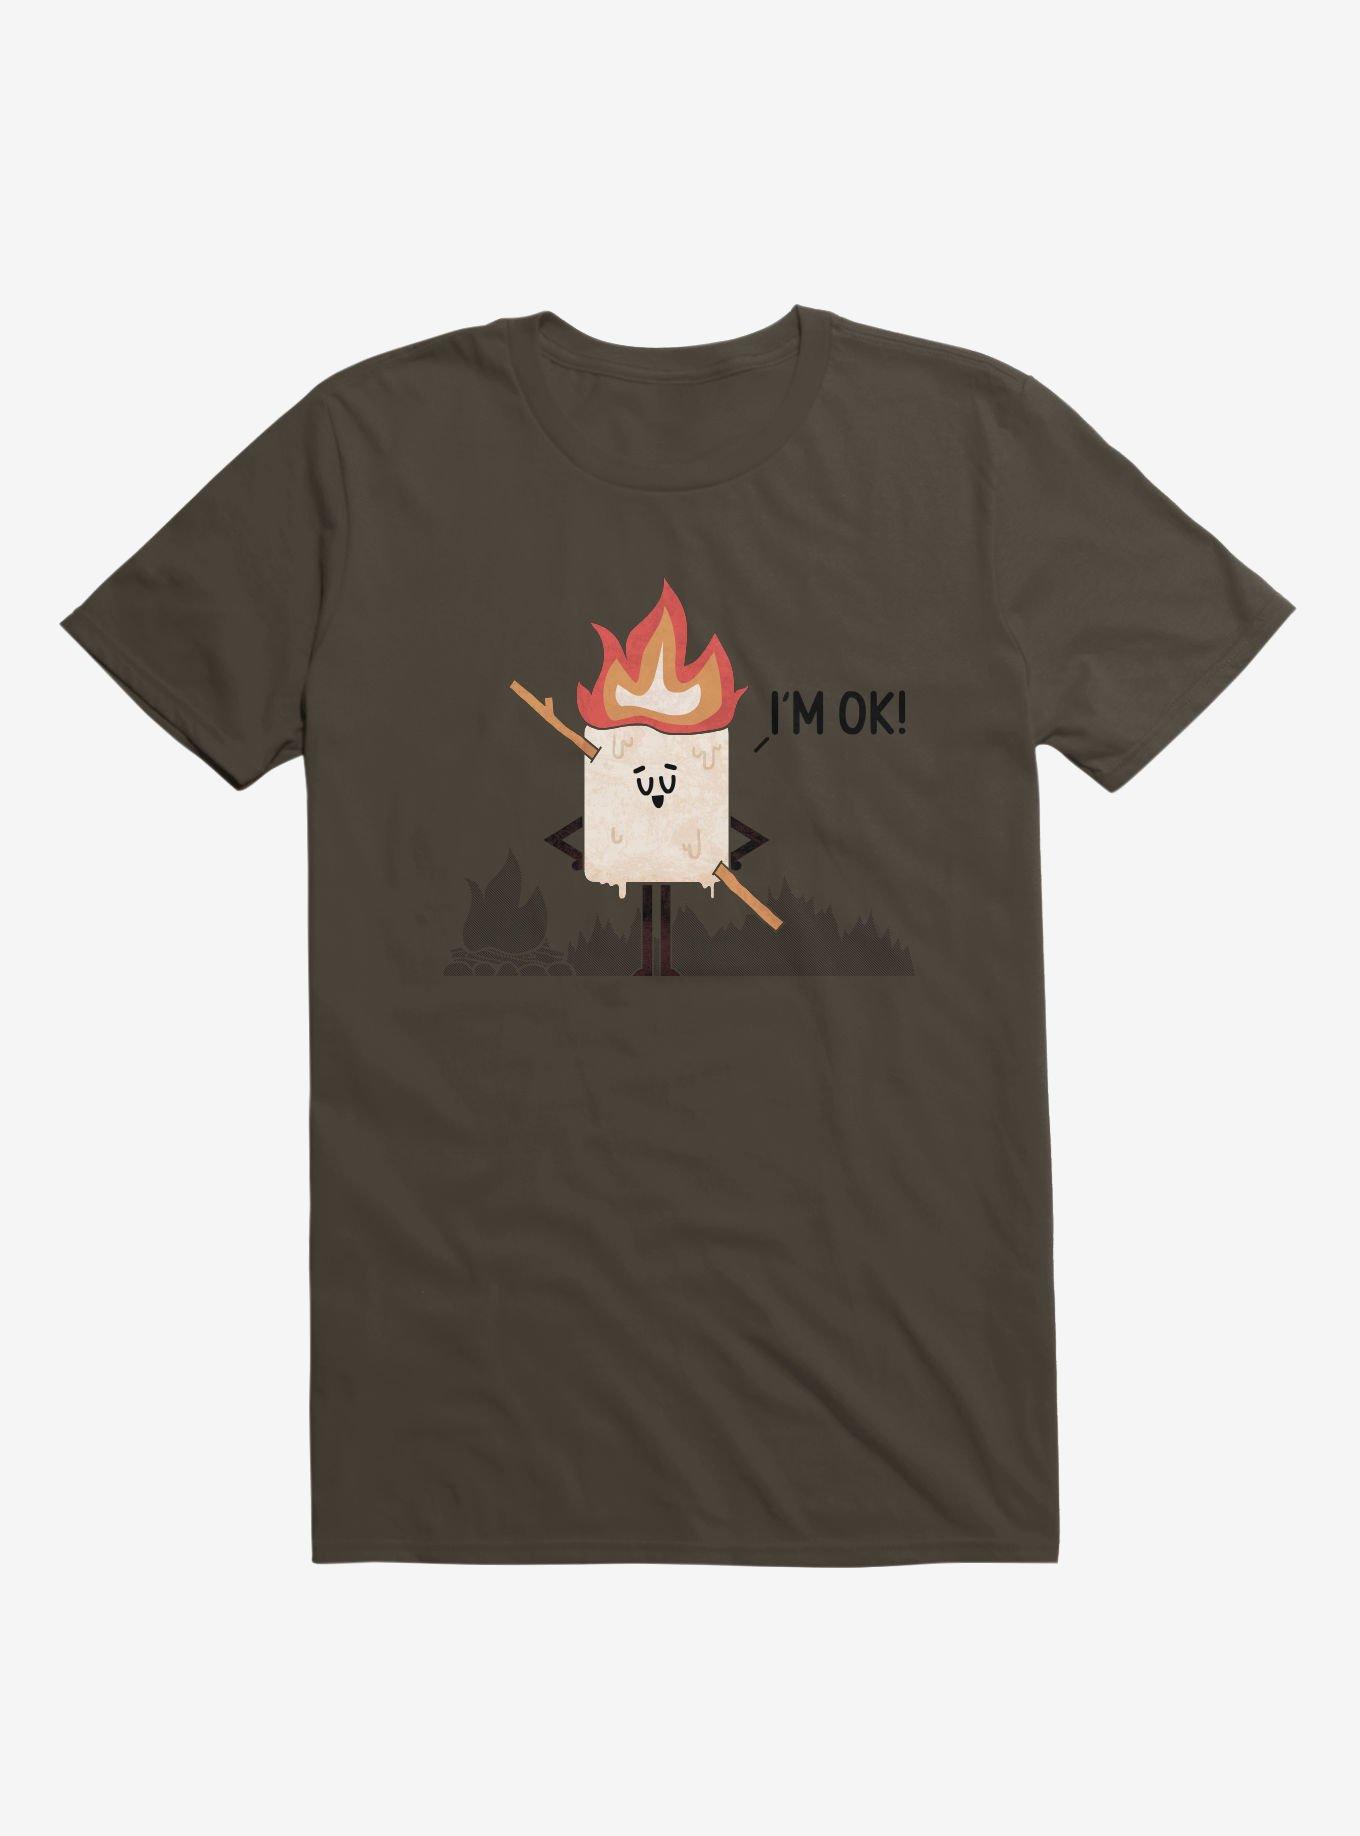 I'm OK! Campfire S'more Brown T-Shirt, BROWN, hi-res